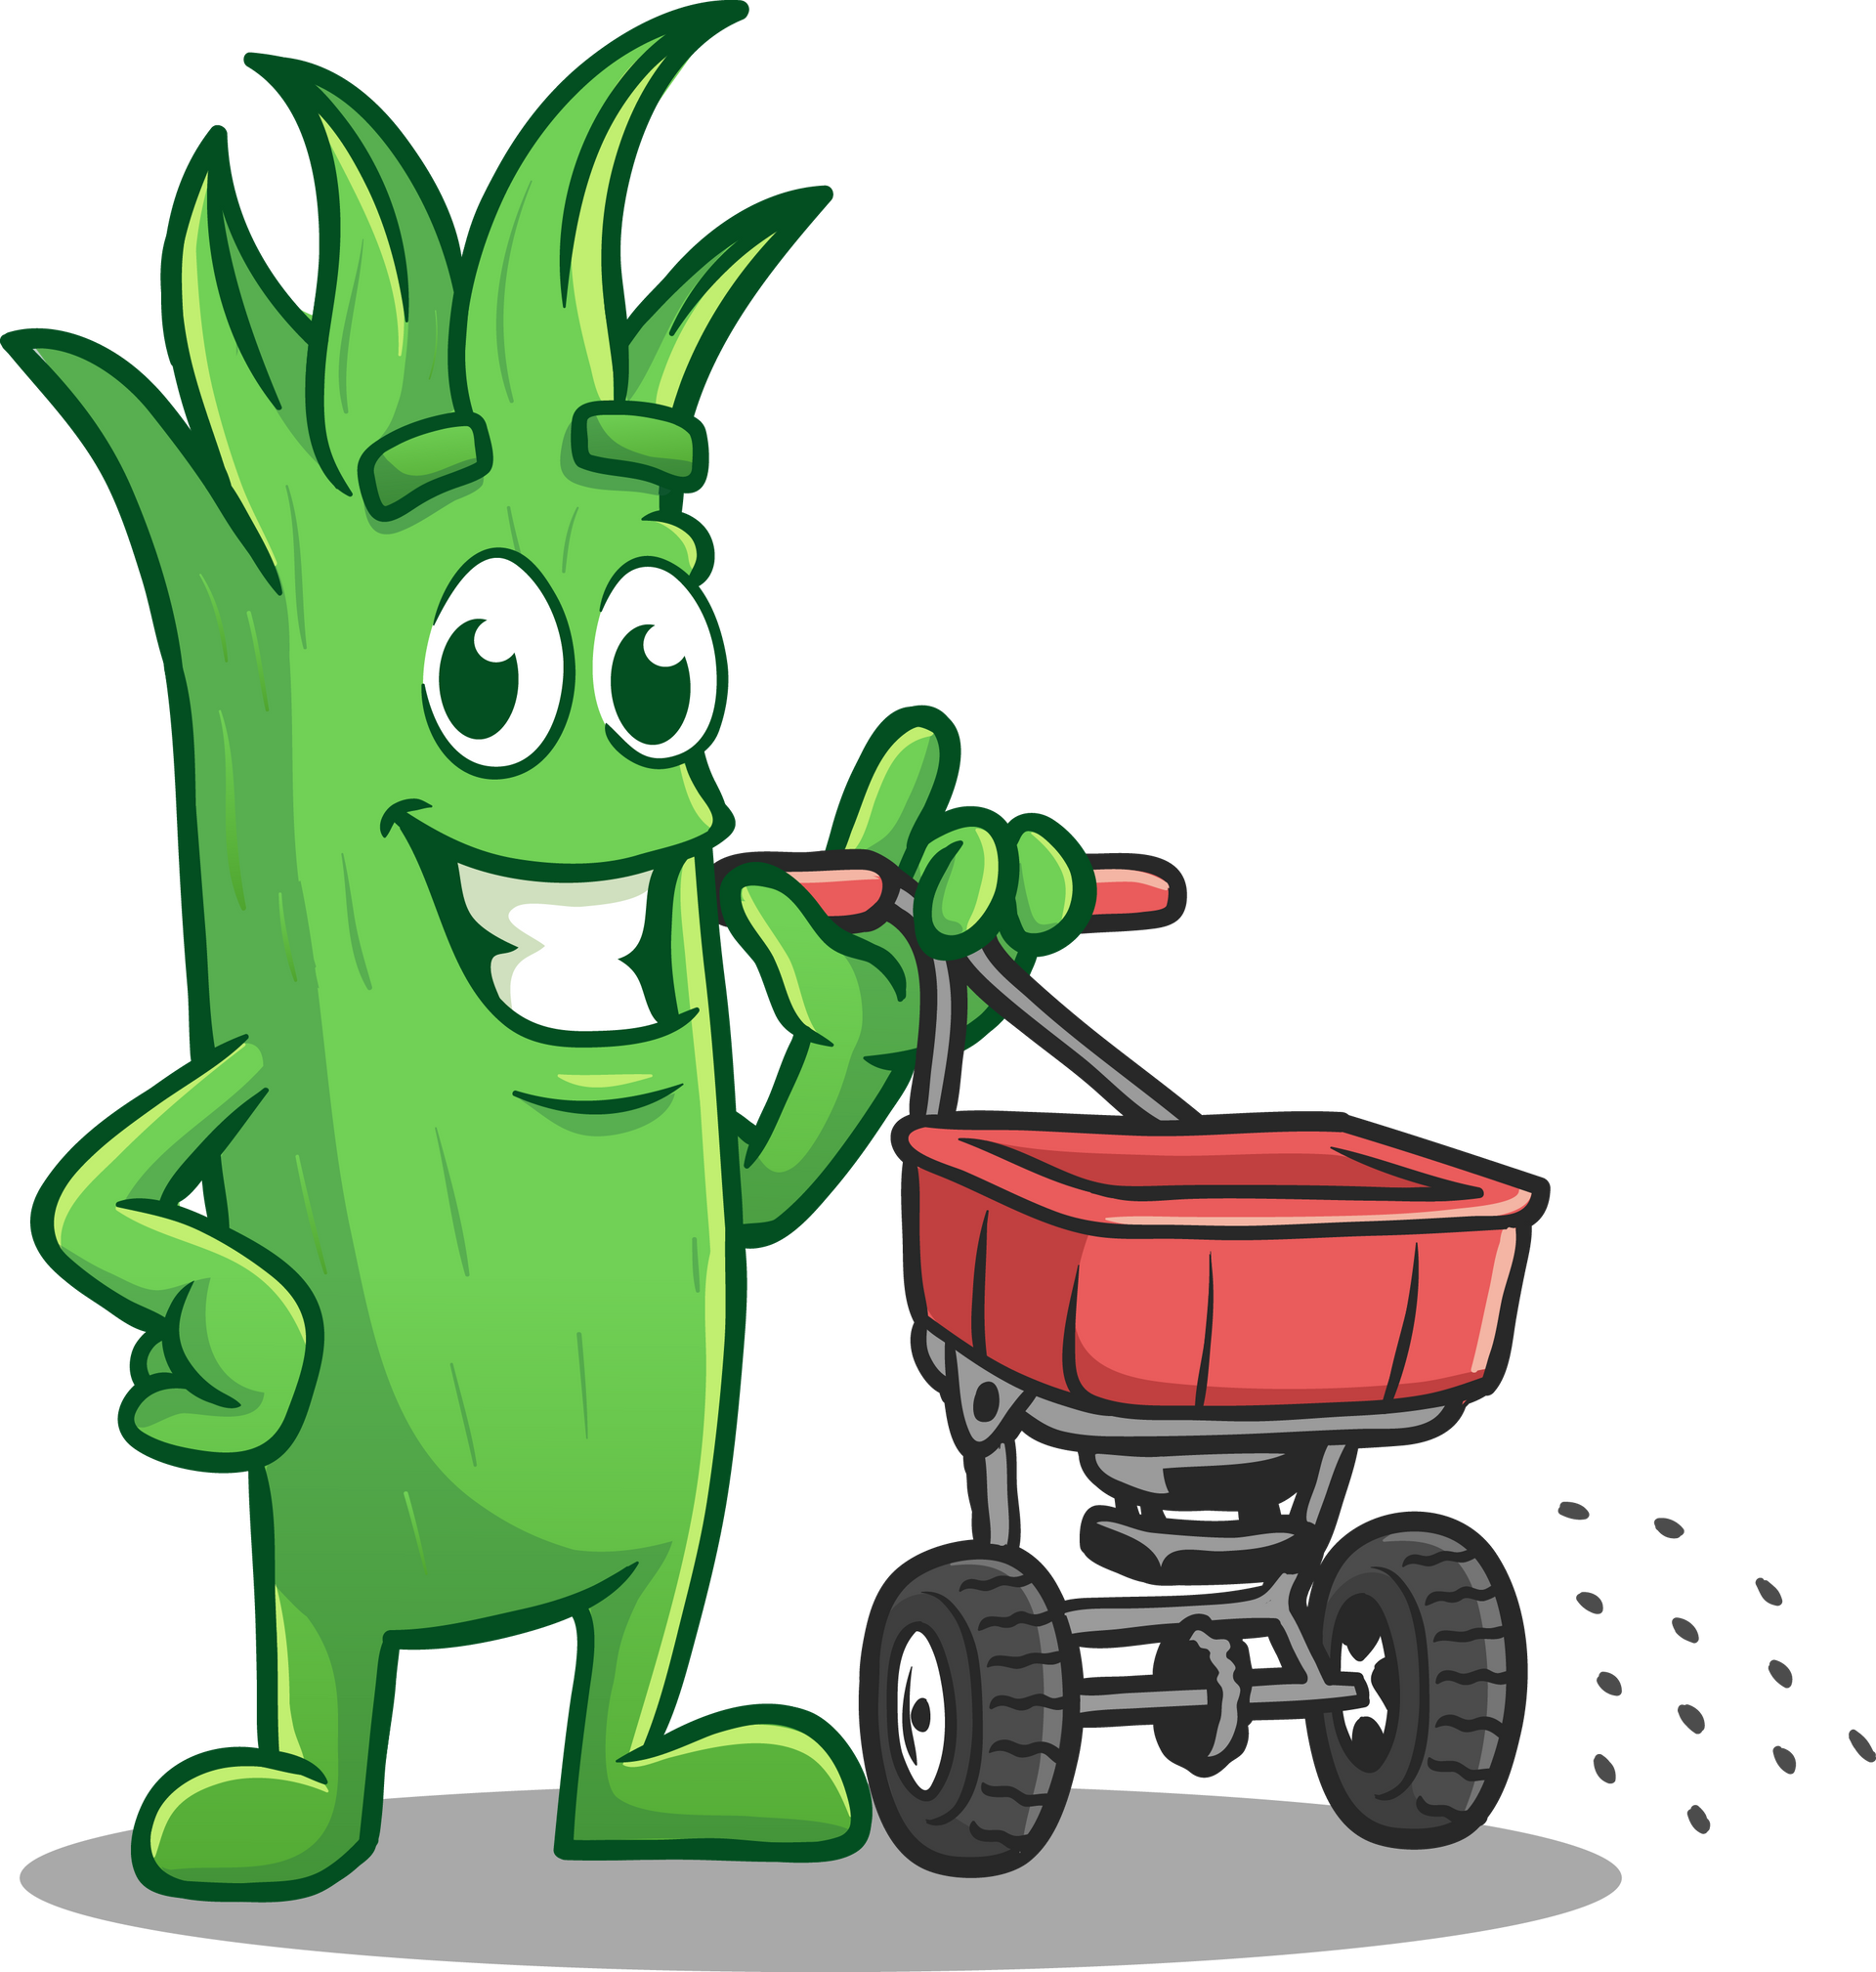 lawn buddies lawn fertilizer service's green mascot